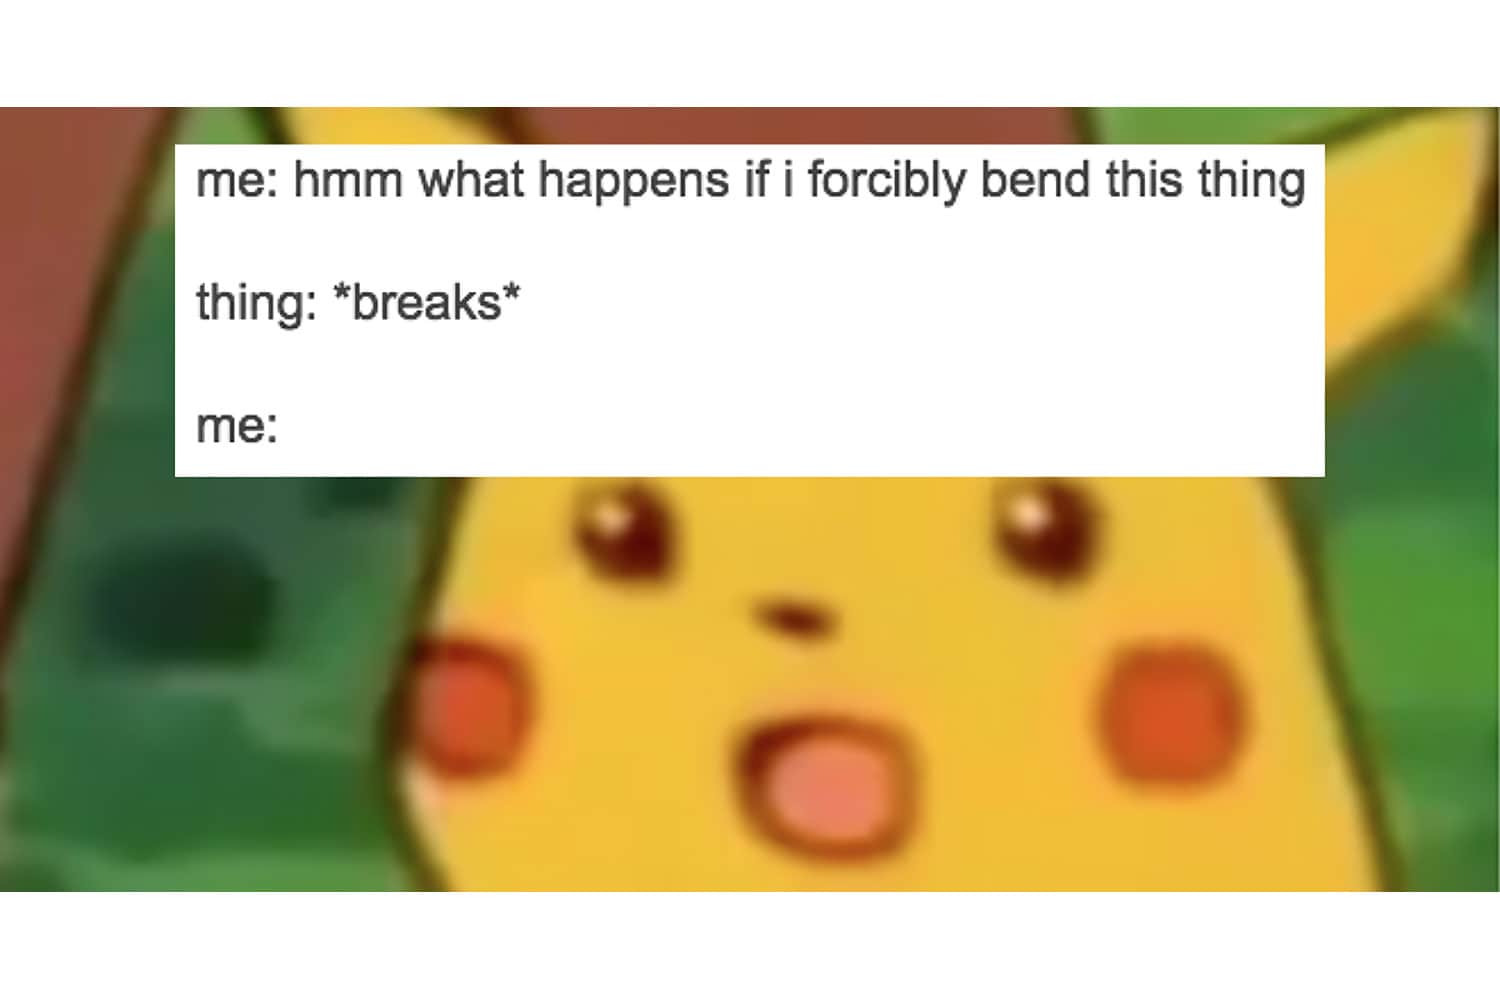 Pikachu Meme Face